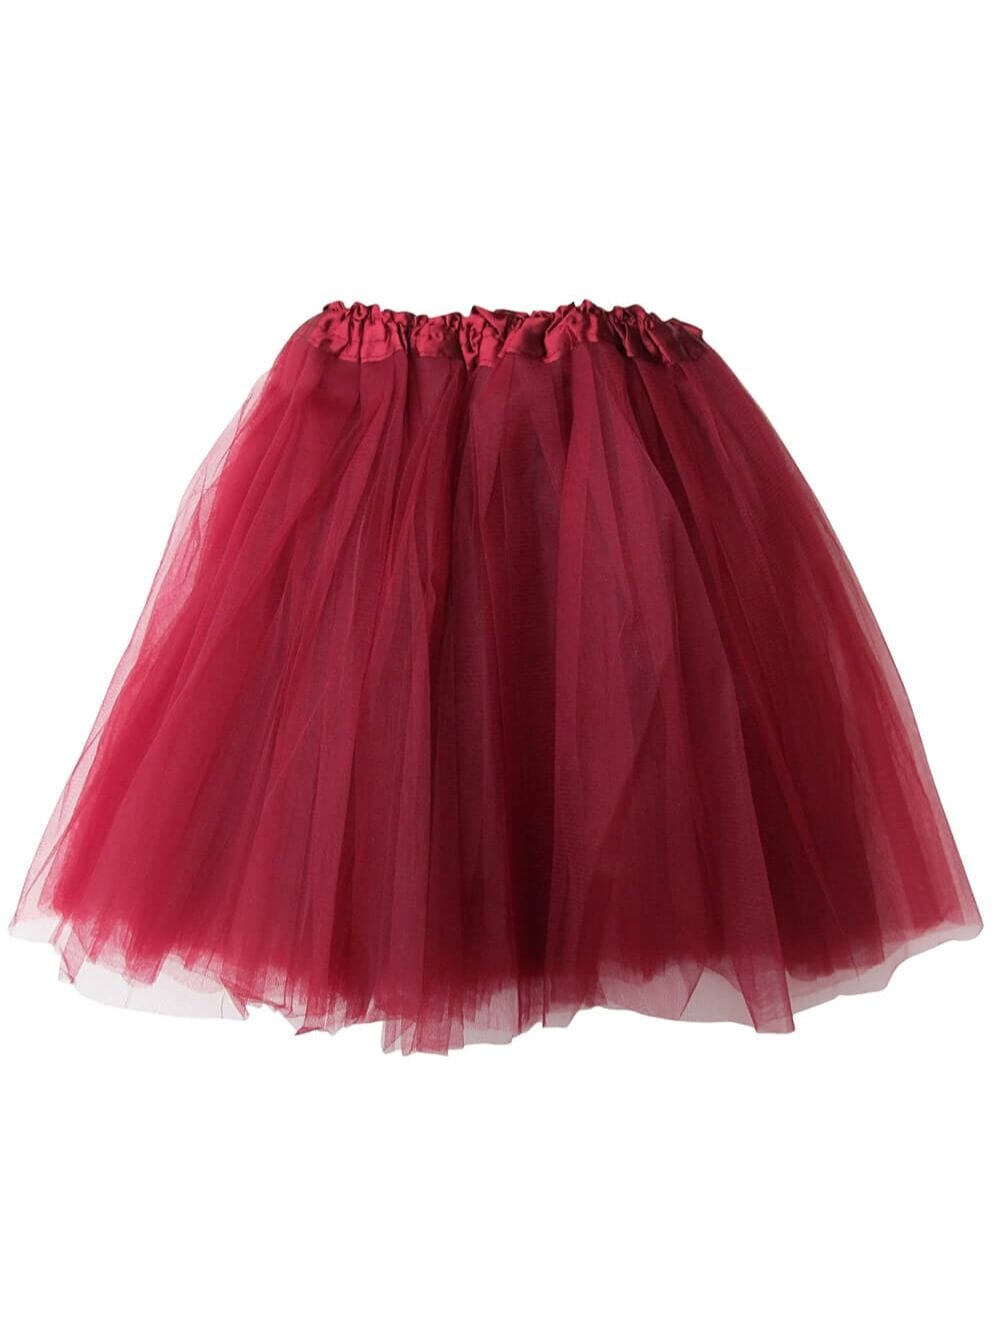 Burgundy Plus Size Adult Tutu Skirt - Women's Plus Size 3- Layer Basic Ballet Costume Dance Tutus - Sydney So Sweet